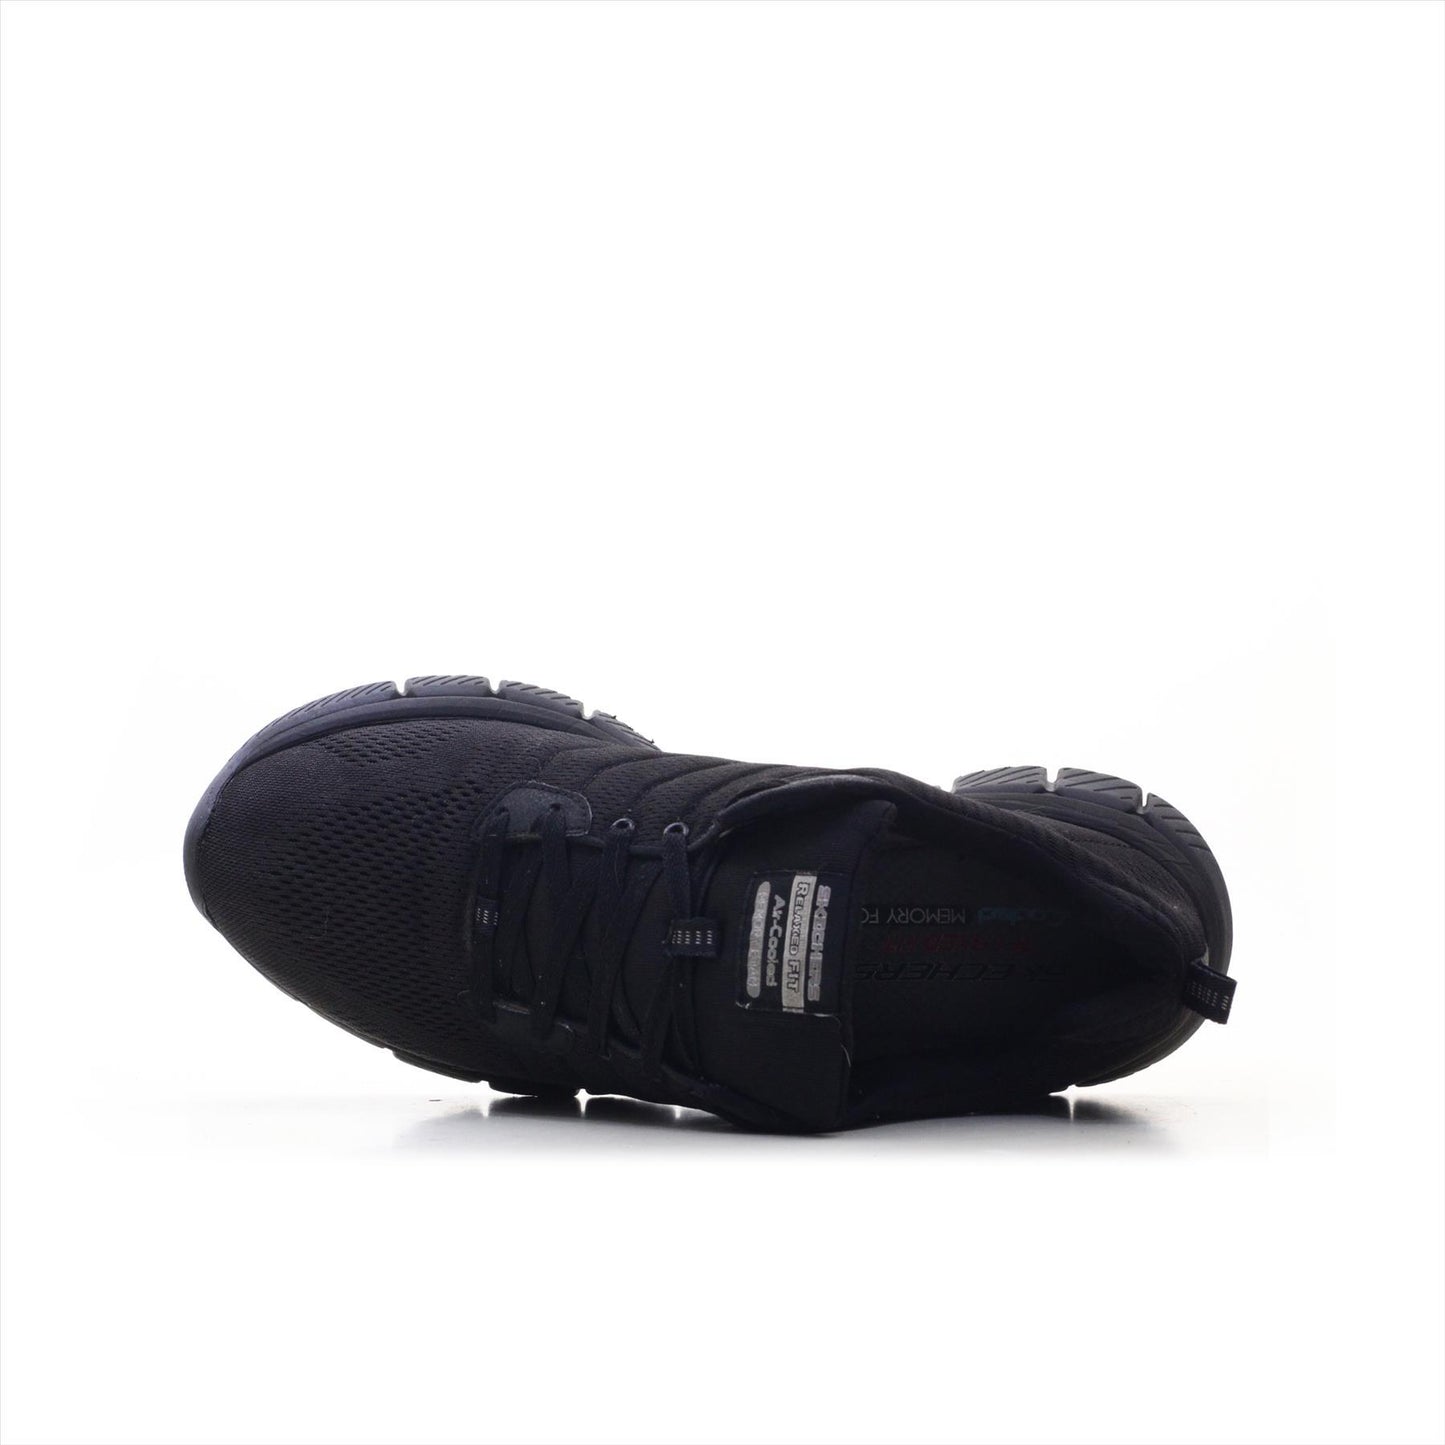 Skechers Relaxed Fit Air Cooled Memory Foam (ORIGINAL)